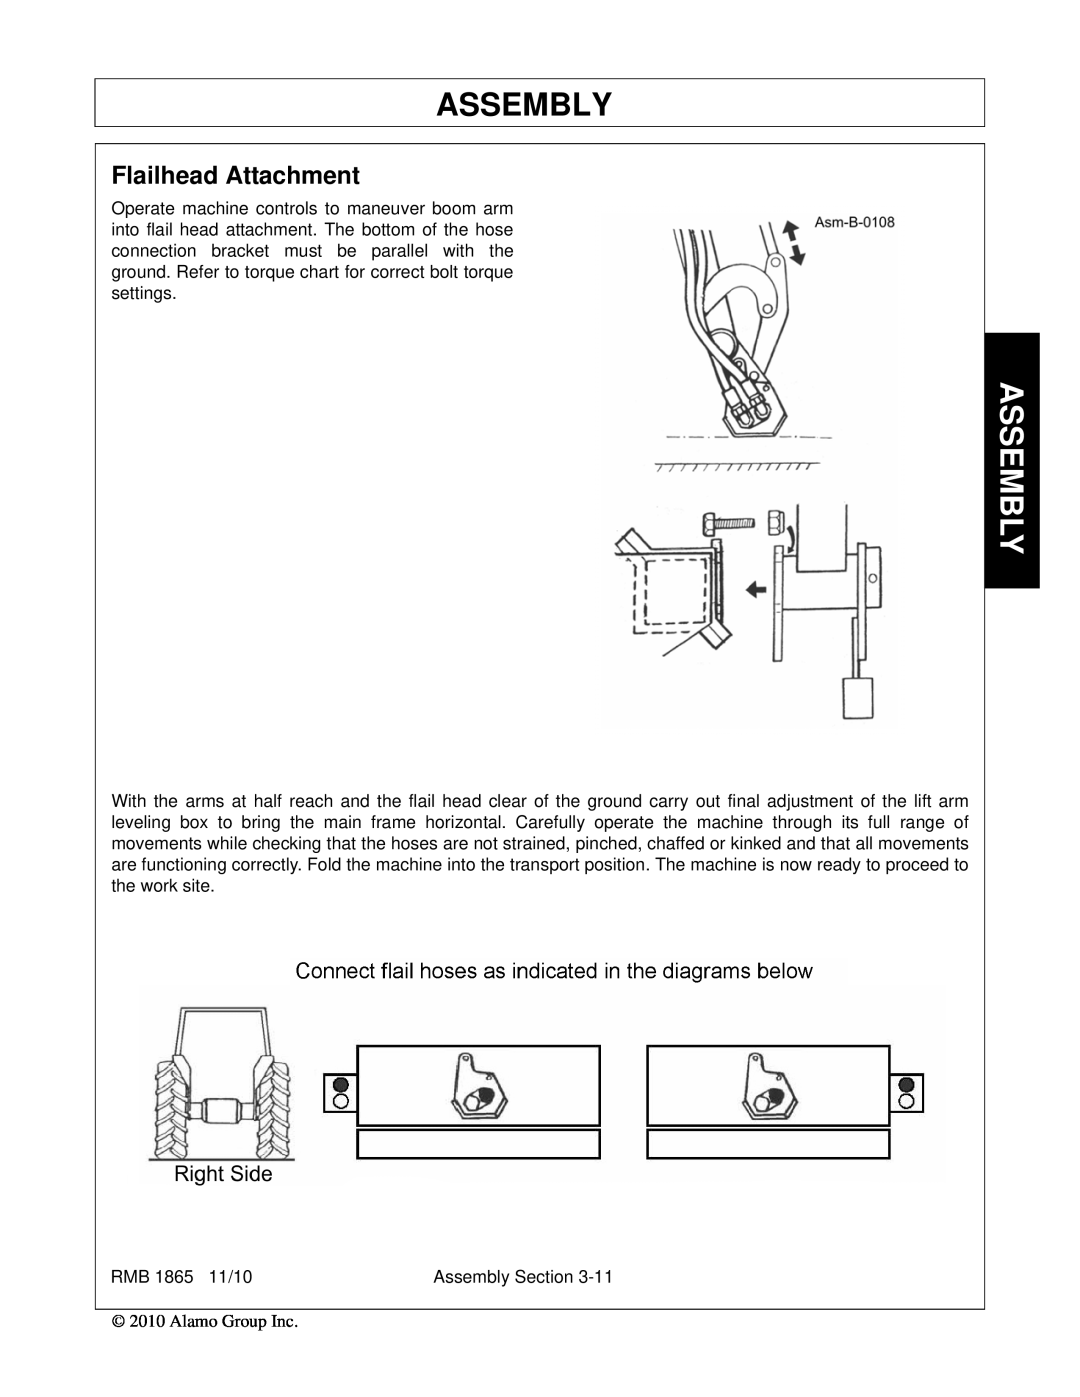 Bush Hog RMB 1865 manual Assembly, Flailhead Attachment 